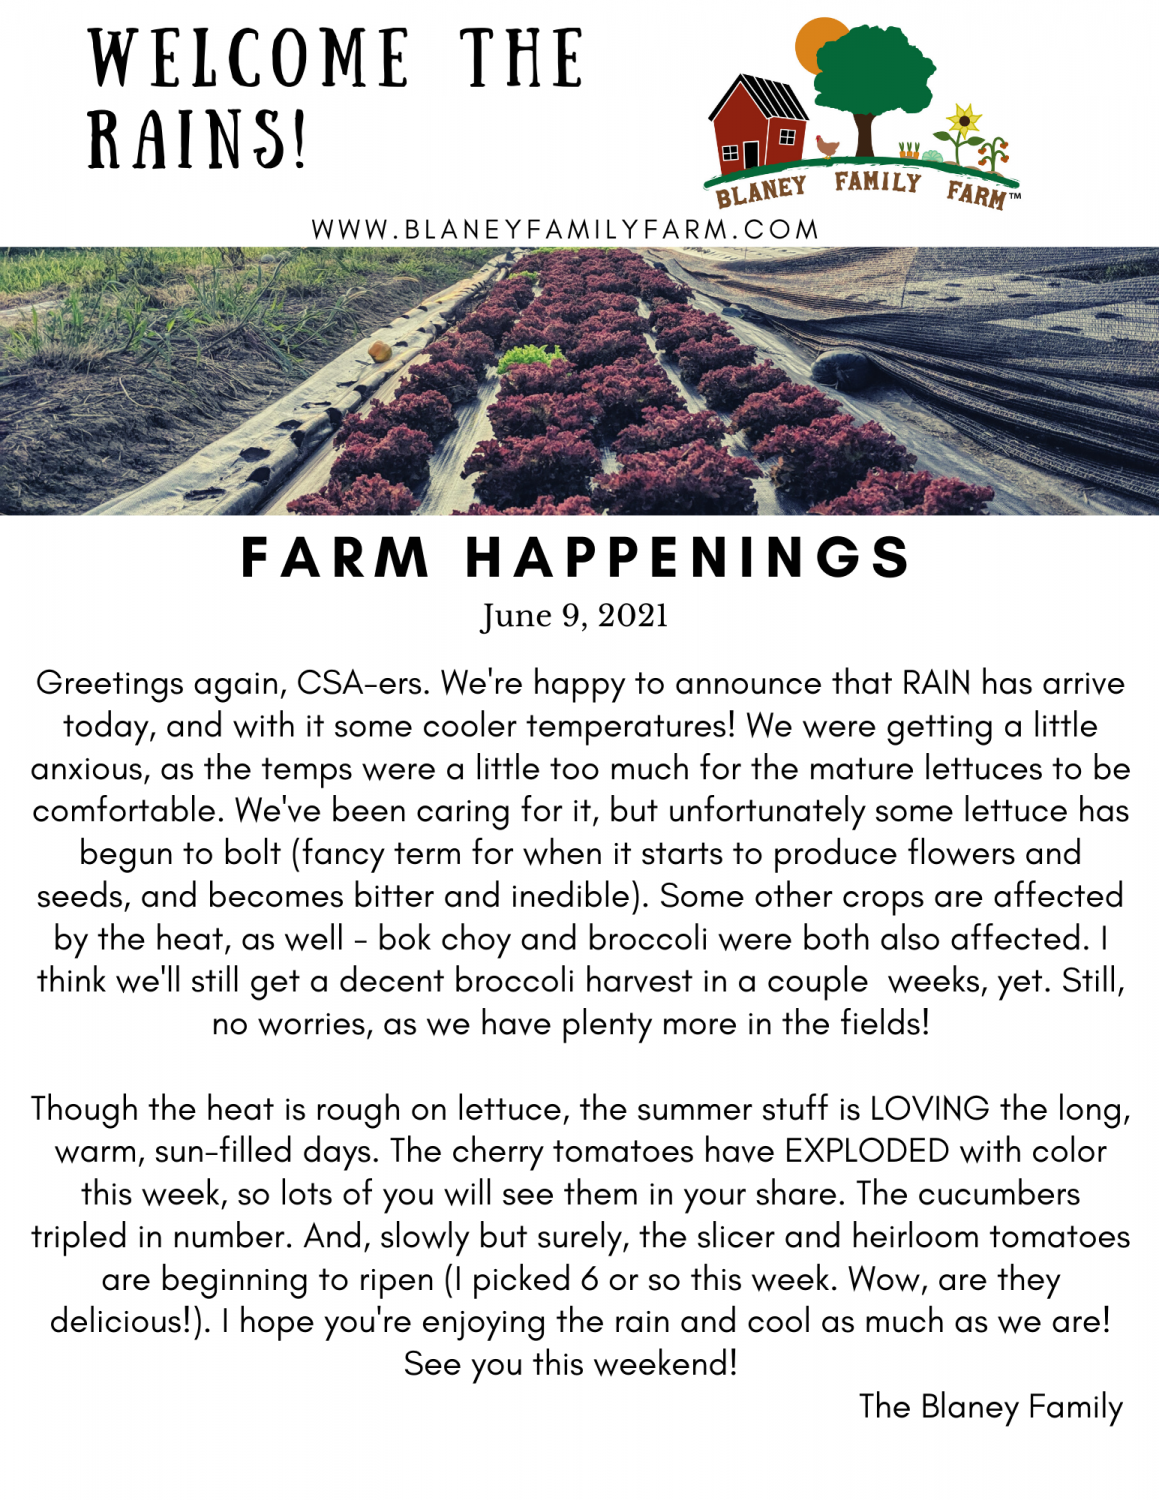 Next Happening: Farm Happenings for June 11, 2021